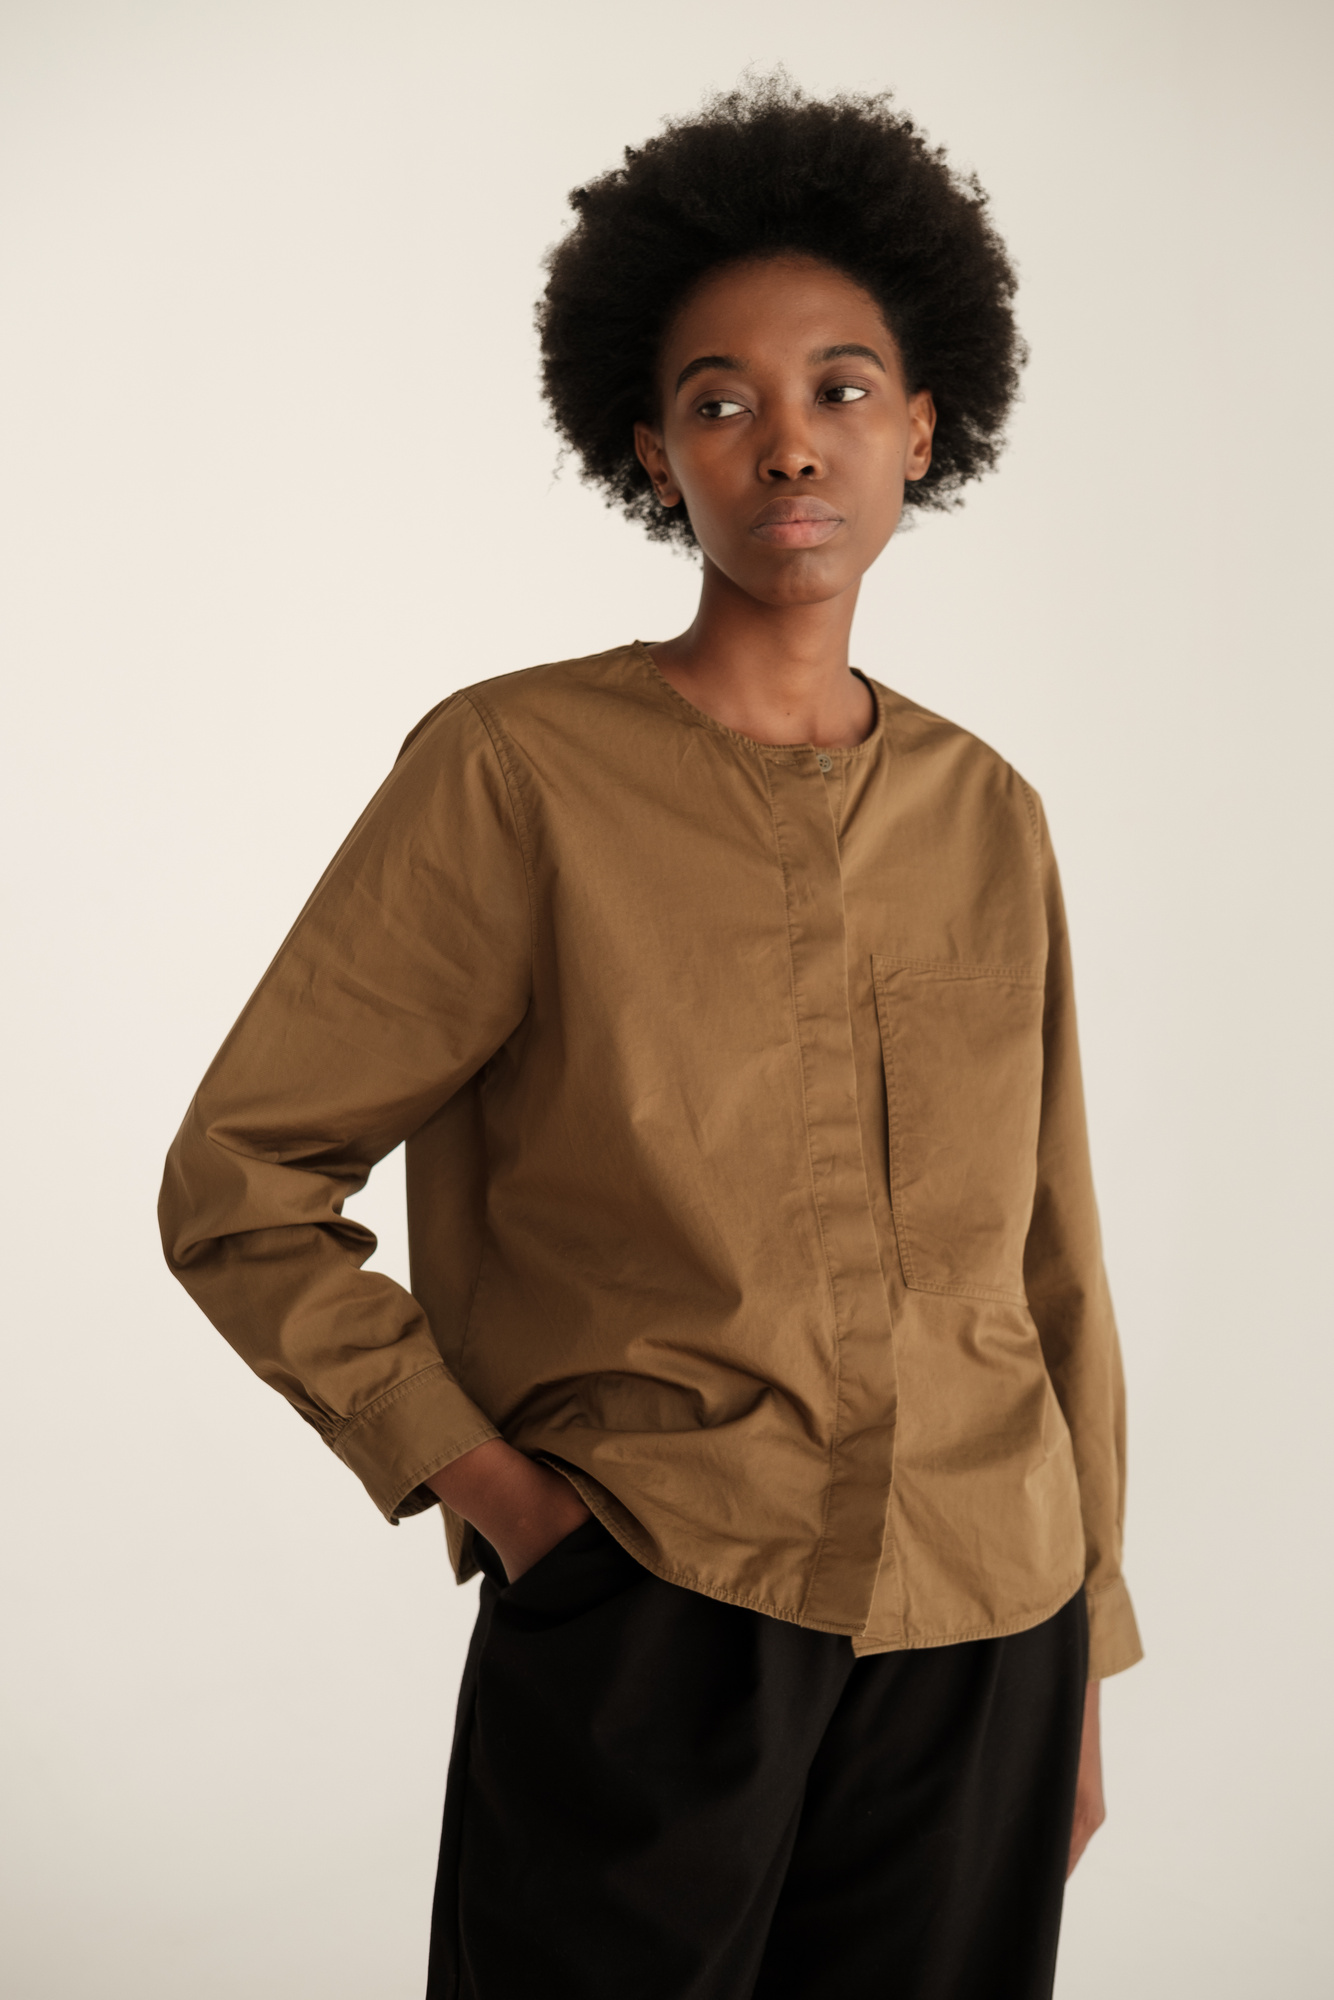 Woman in Casual Brown Dress Shirt and Slacks